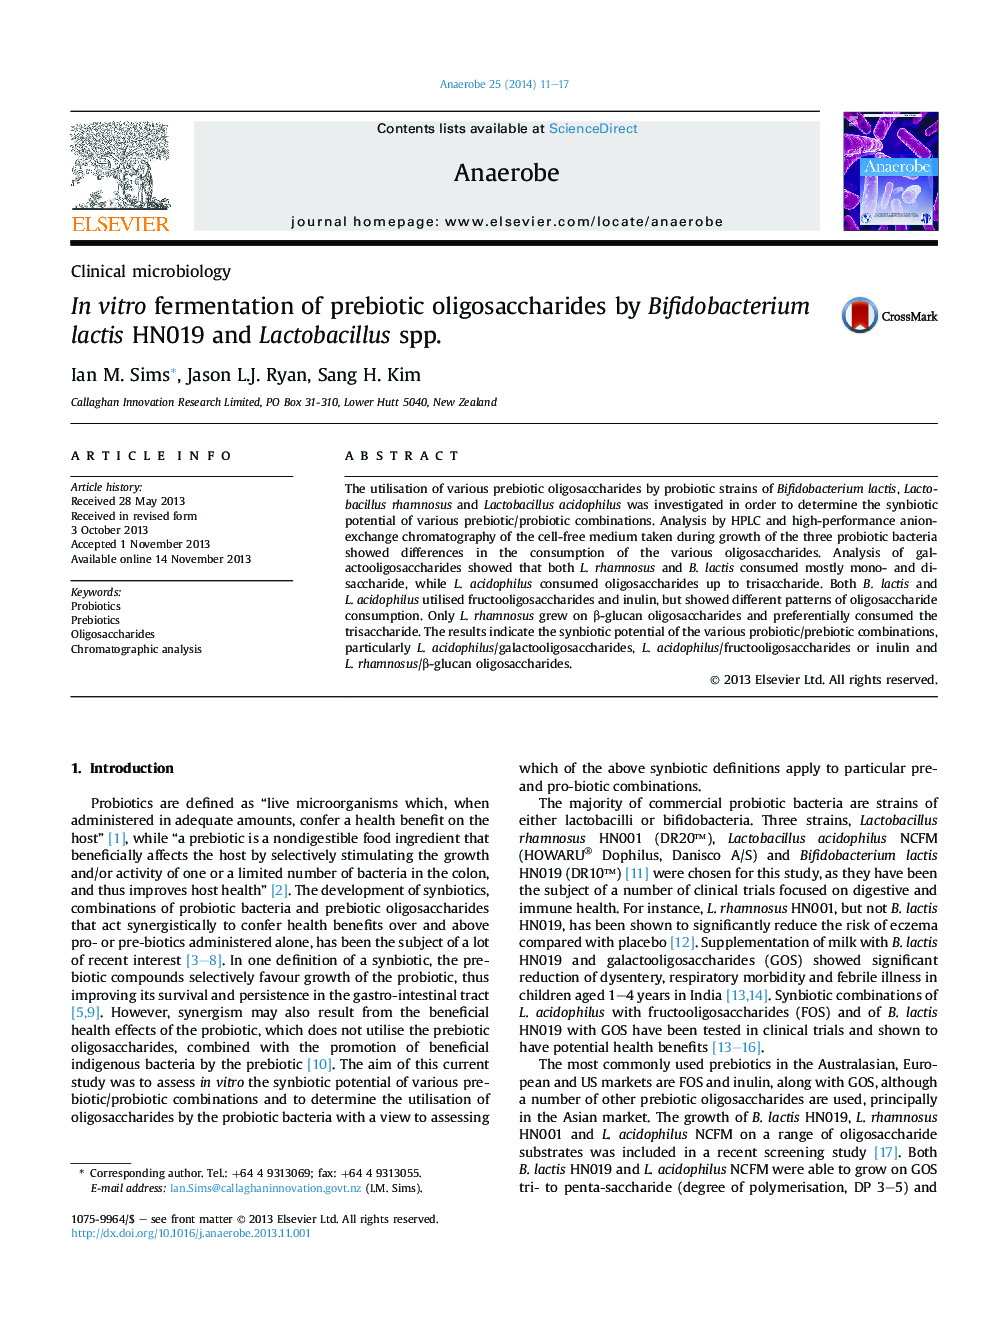 In vitro fermentation of prebiotic oligosaccharides by Bifidobacterium lactis HN019 and Lactobacillus spp.